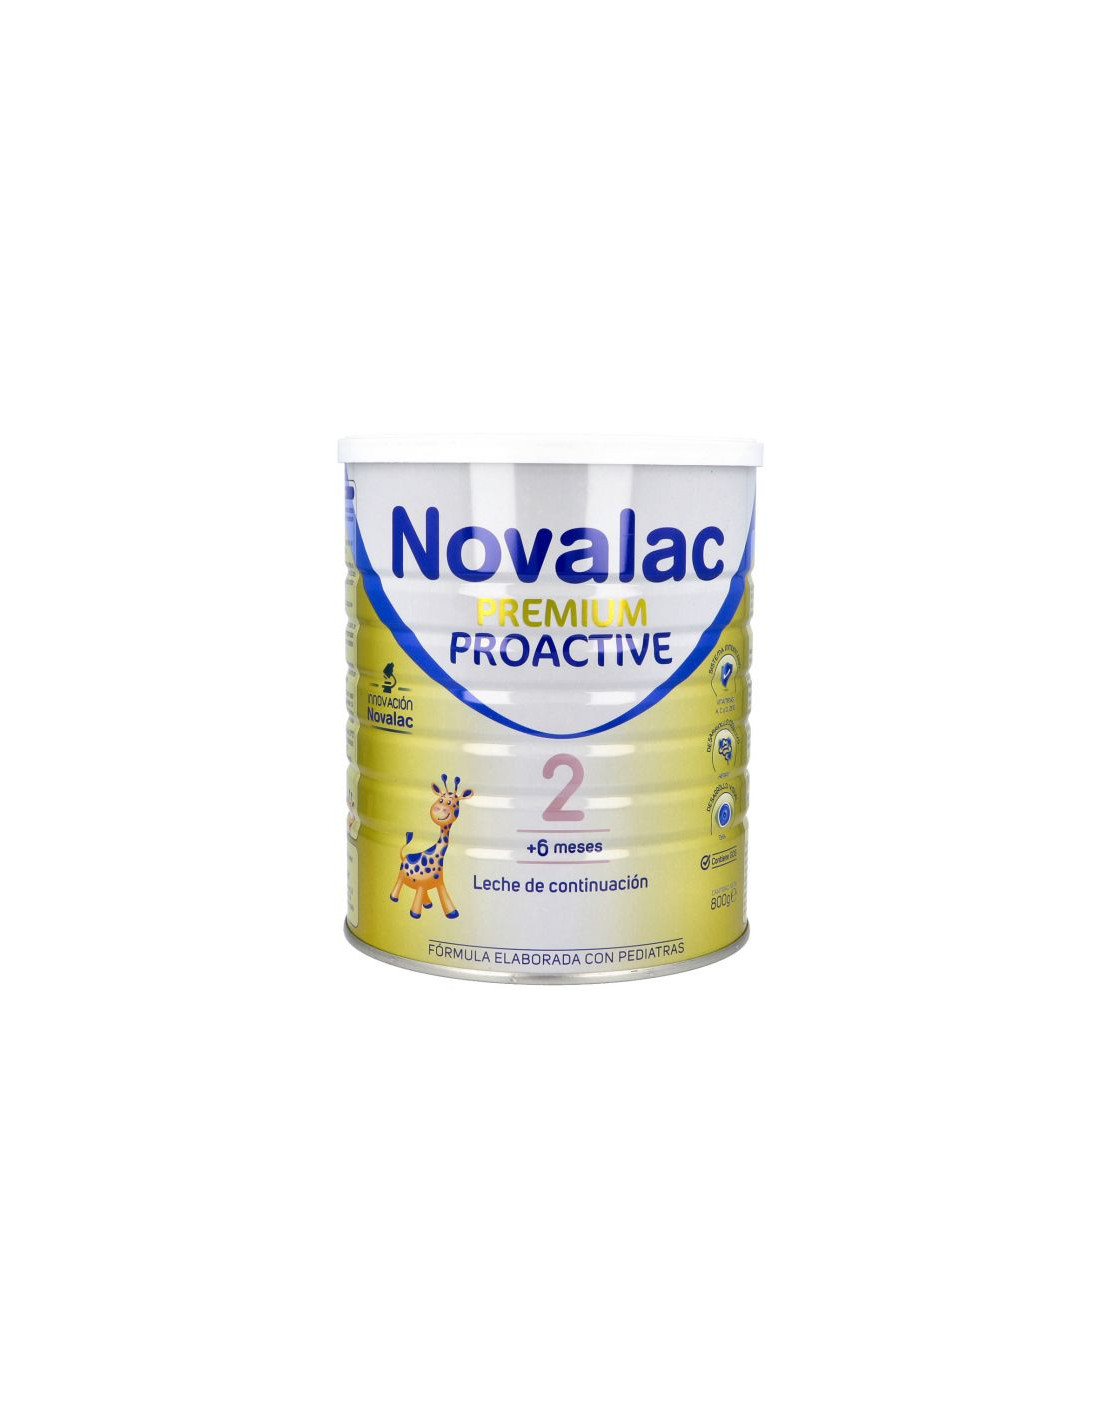 novalac premium proactive 2 1 envase 800 g